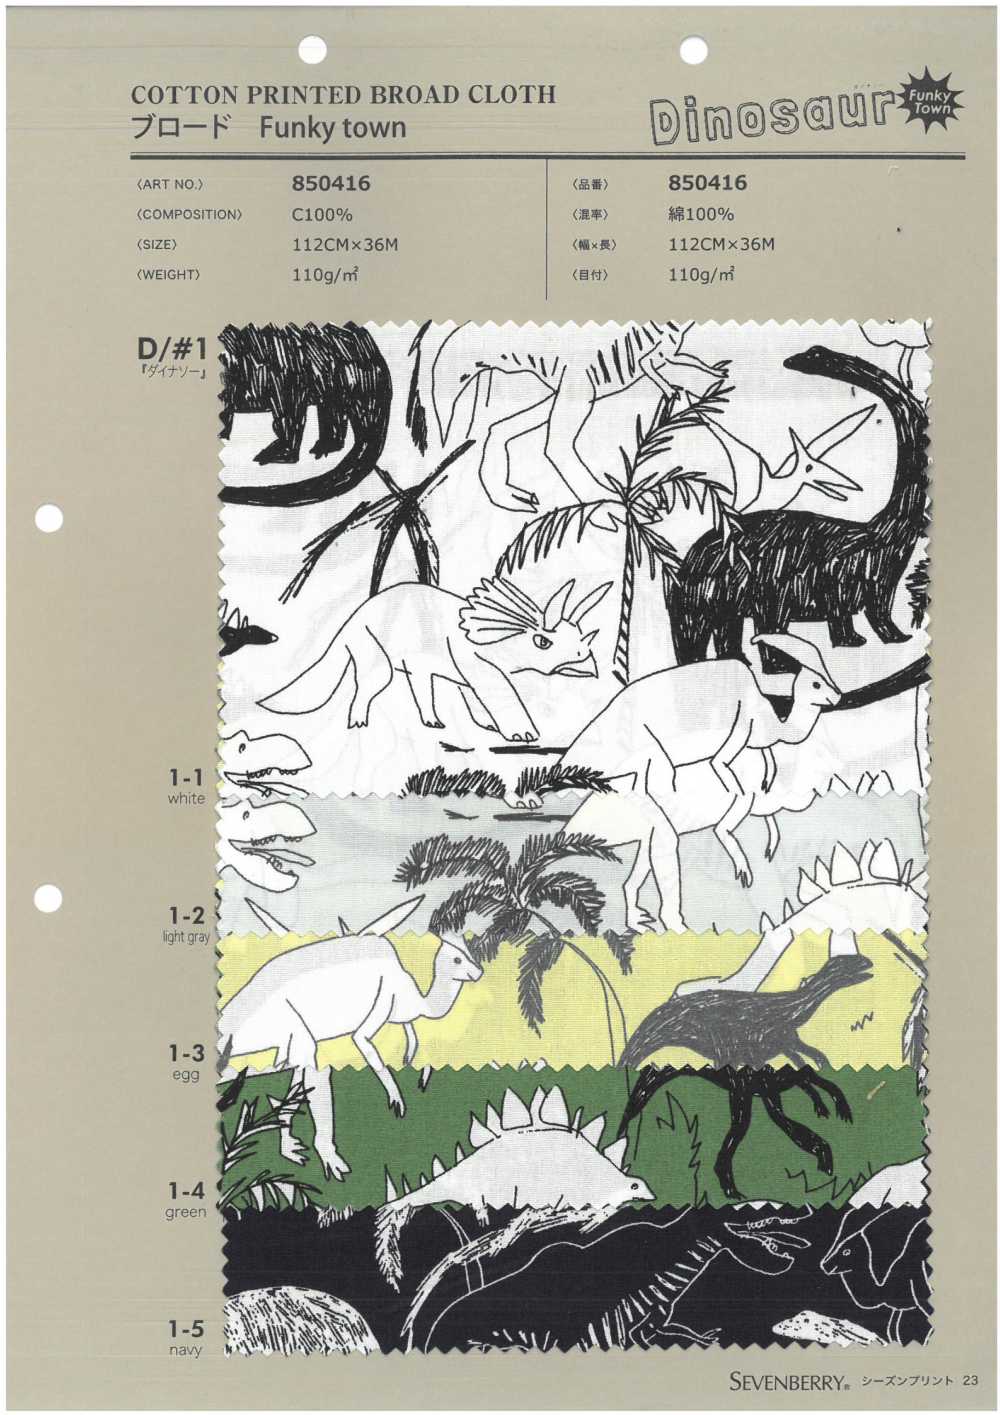 850416 Broadcloth Funkytown Dinosaur[Textile / Fabric] VANCET